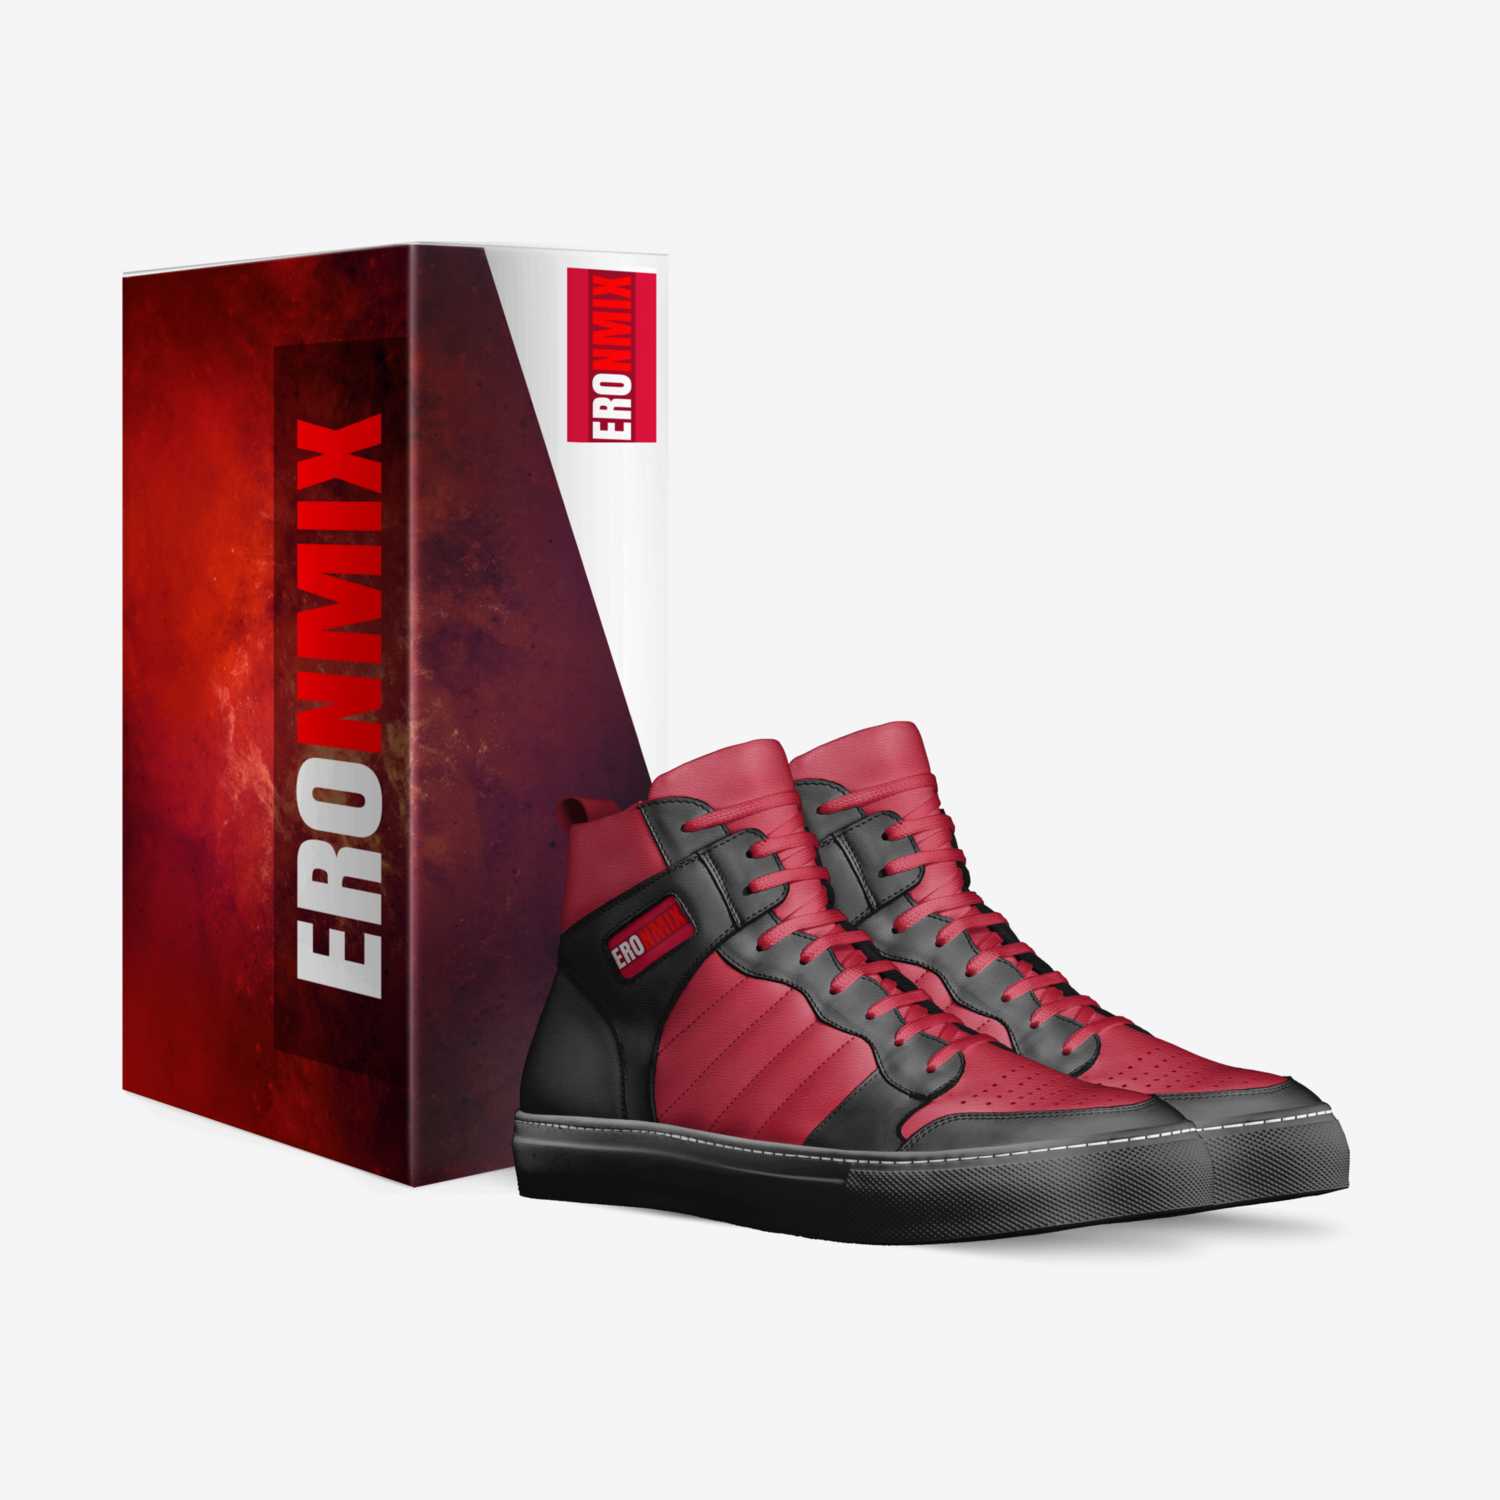 Eronmix C-Walks custom made in Italy shoes by Eduardo Ramirez | Box view